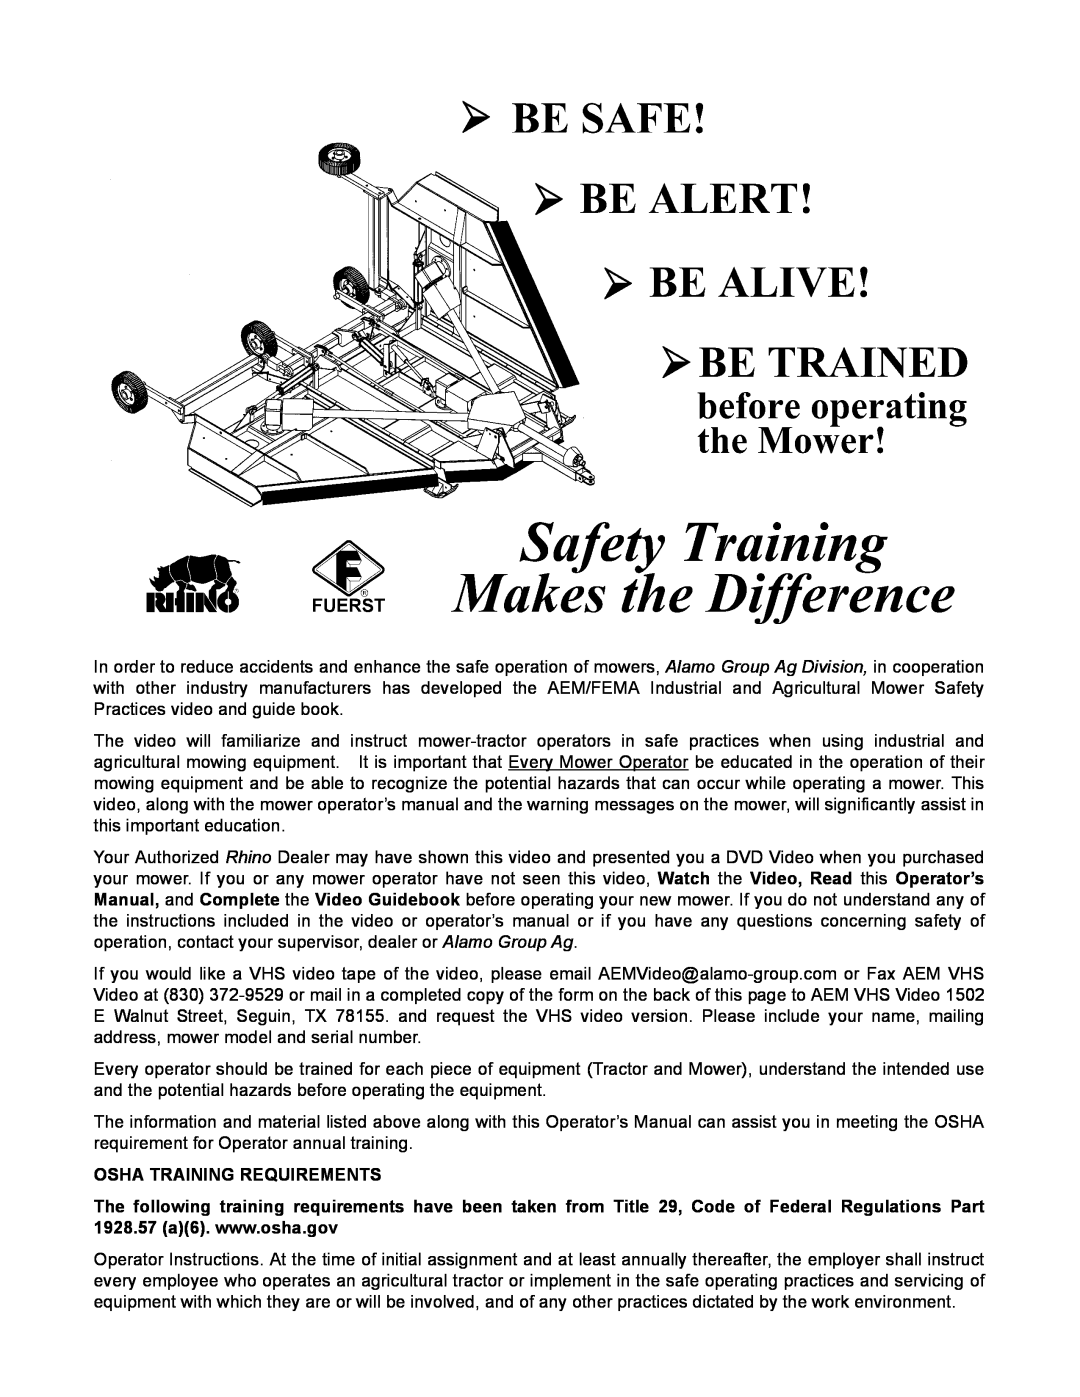 Alamo 1900 manual Osha Training Requirements 